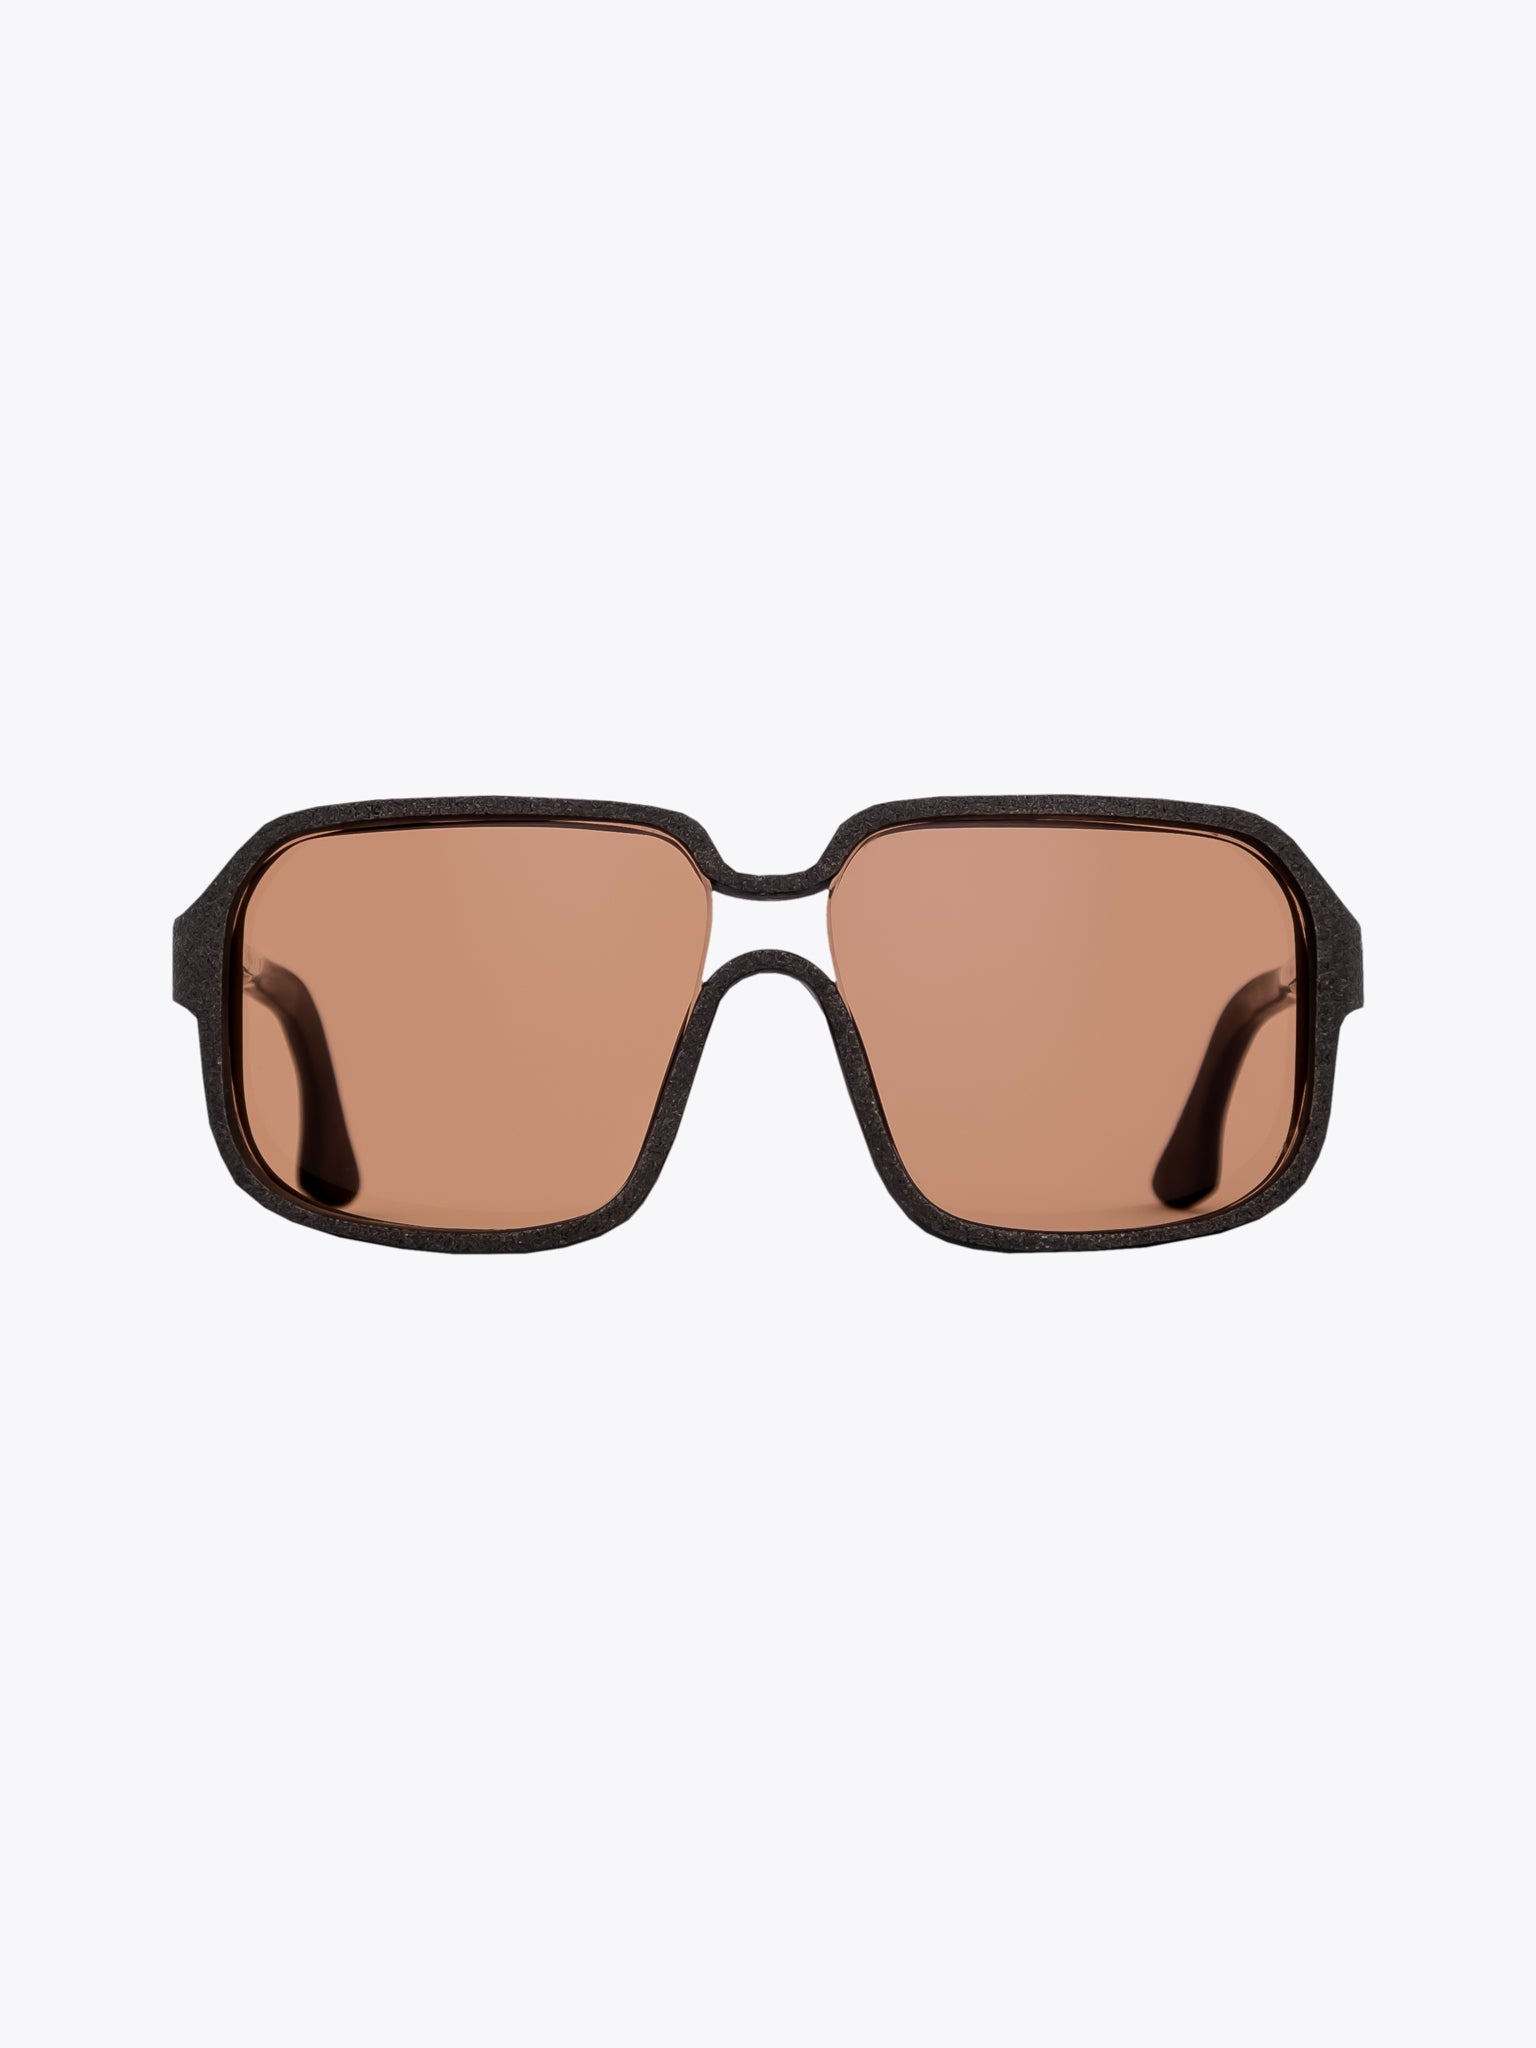 IMPURI Super Recycled Carbon Sunglasses Graphite